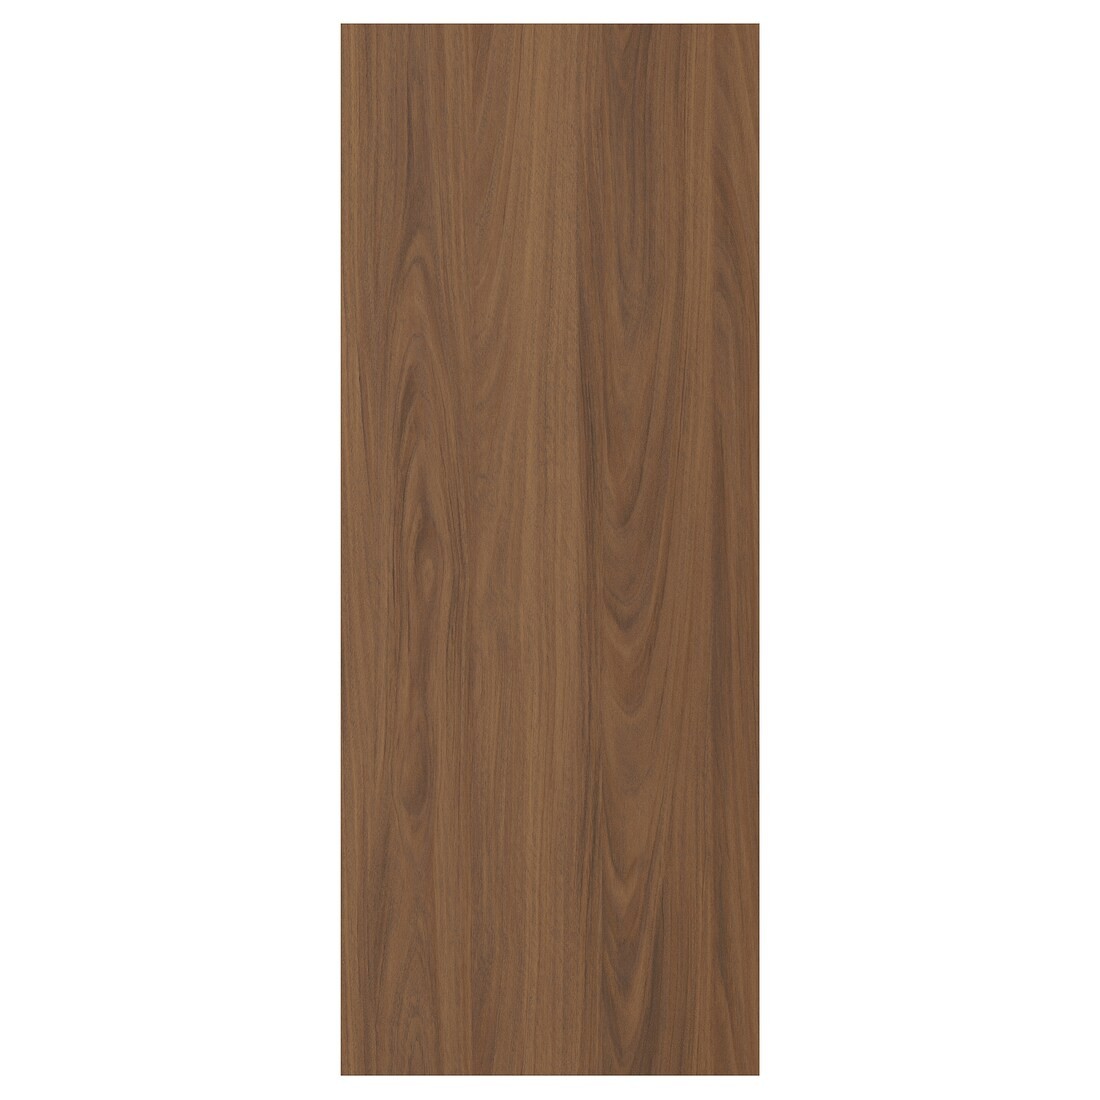 IKEA TISTORP Дверь, коричневый орех, 40x100 см 20558484 205.584.84